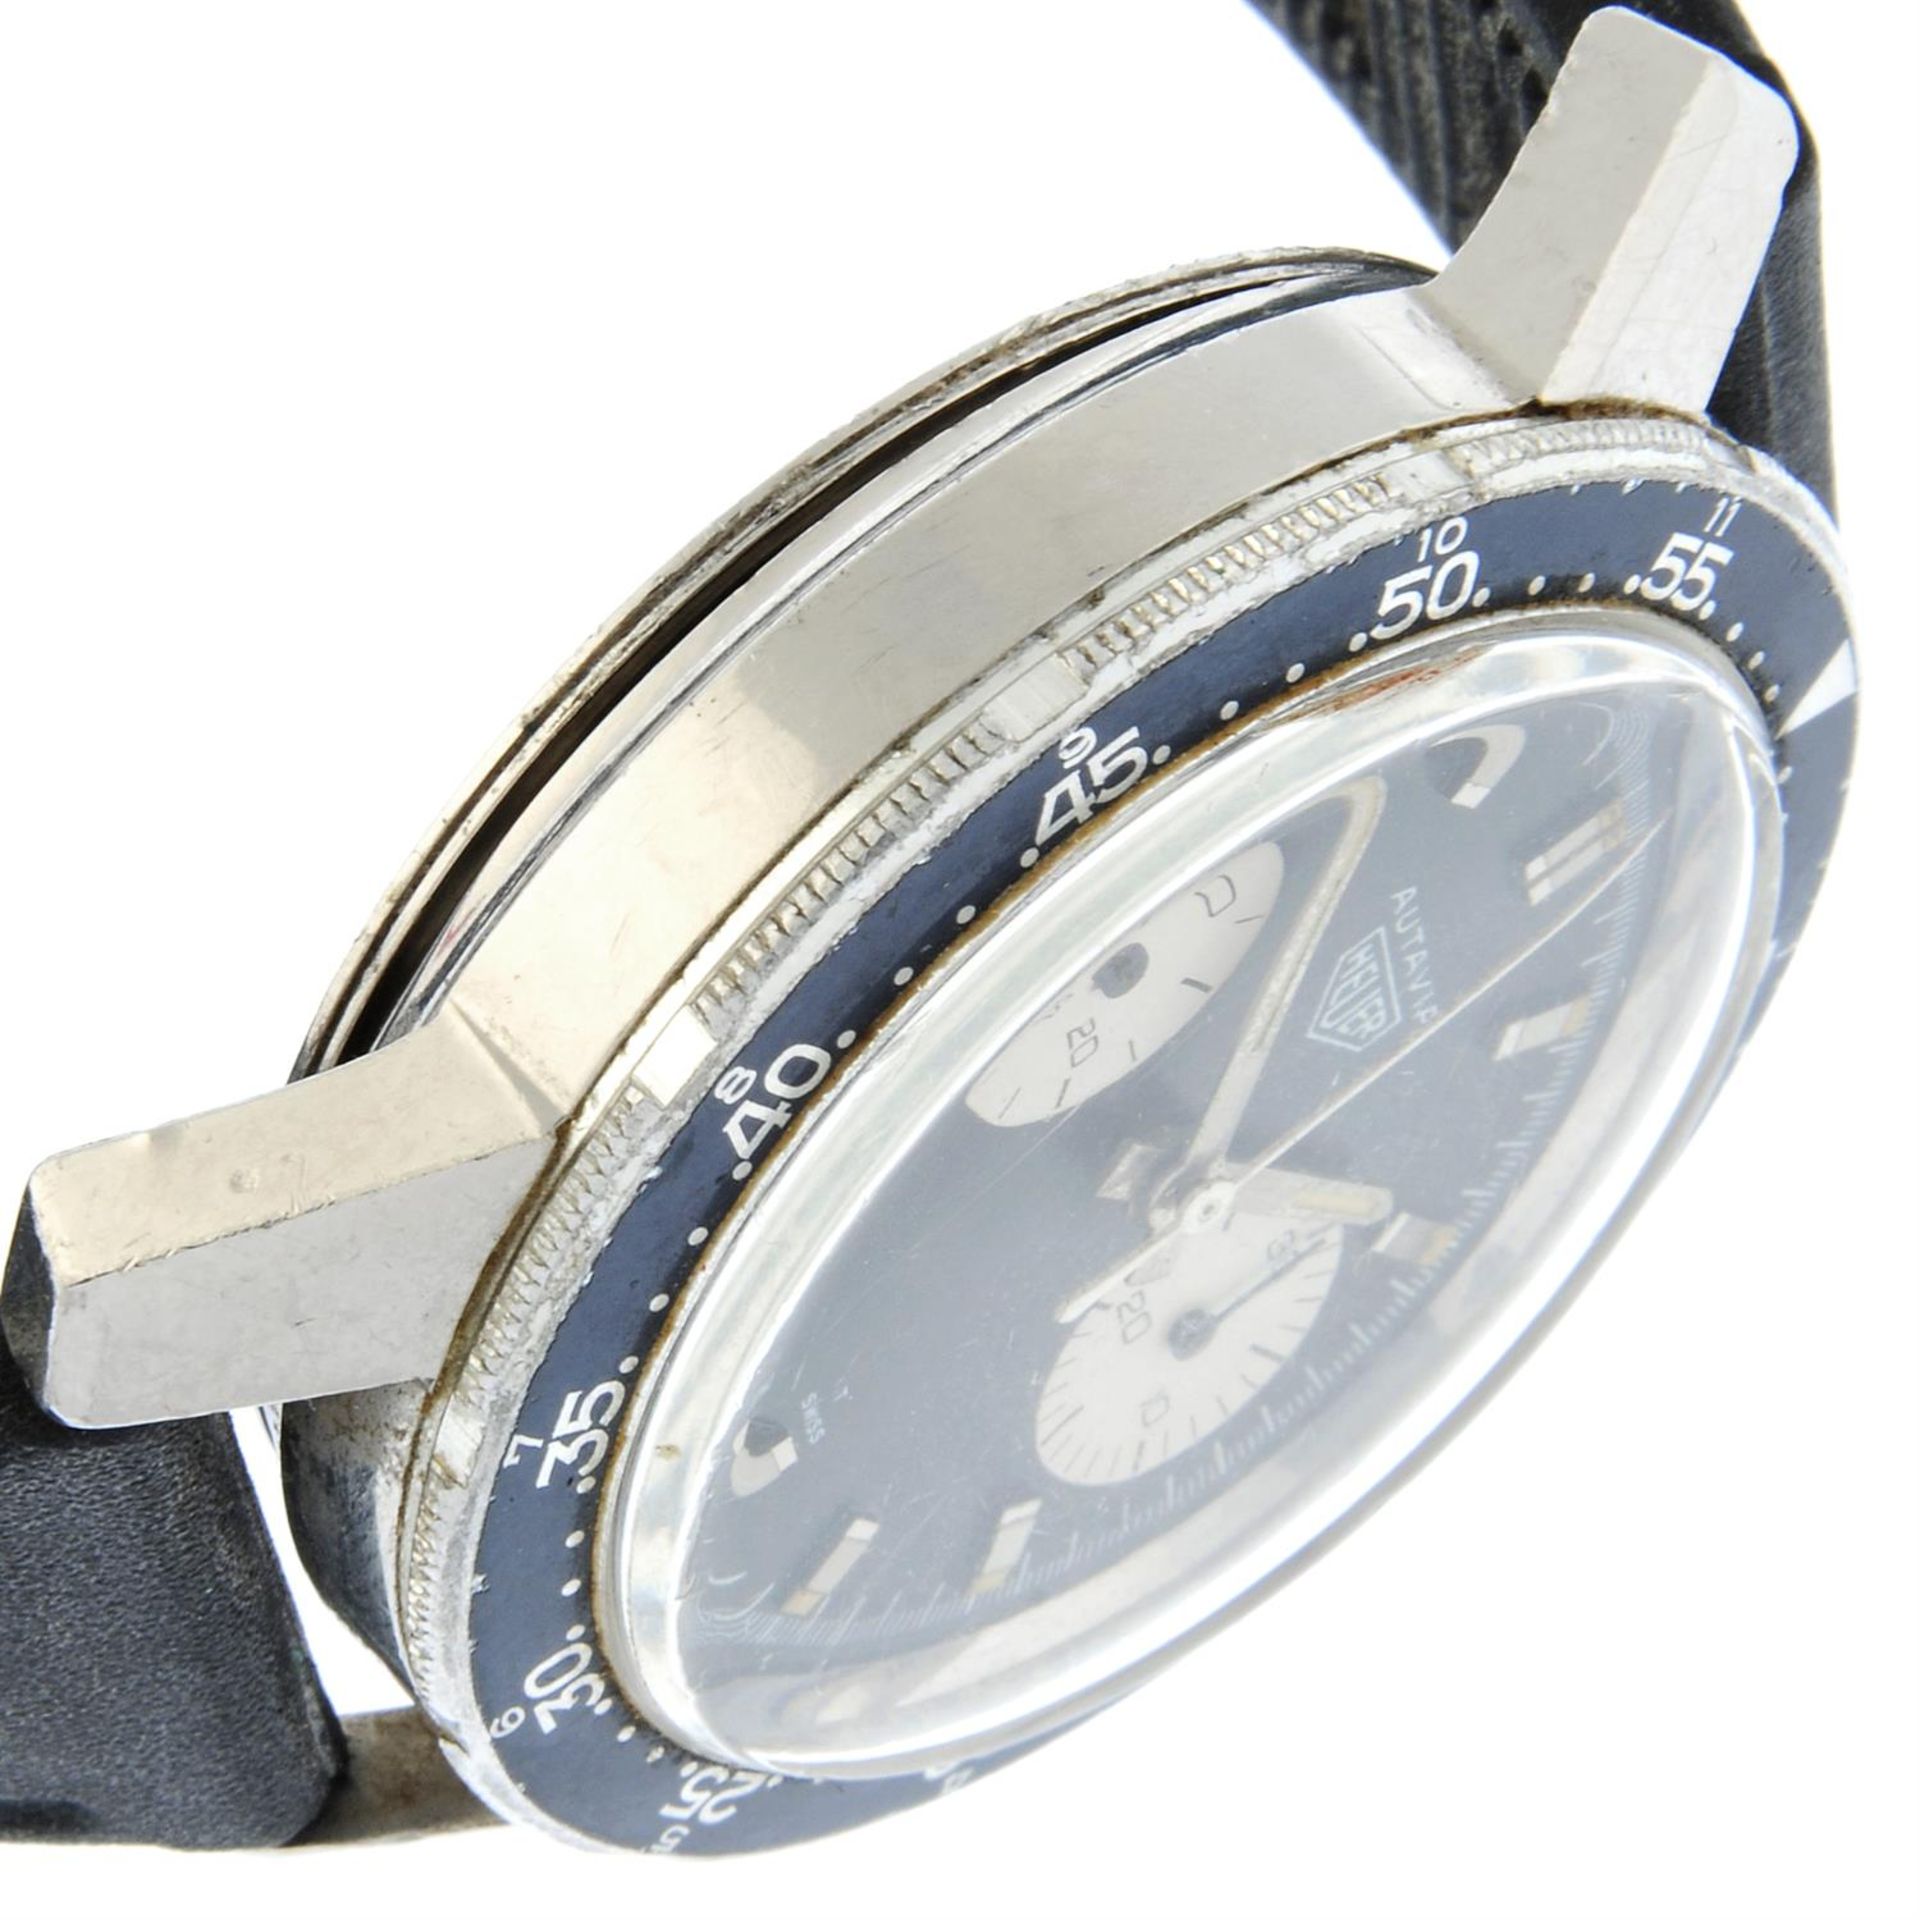 Heuer - an Autavia chronograph watch, 40mm. - Image 4 of 7